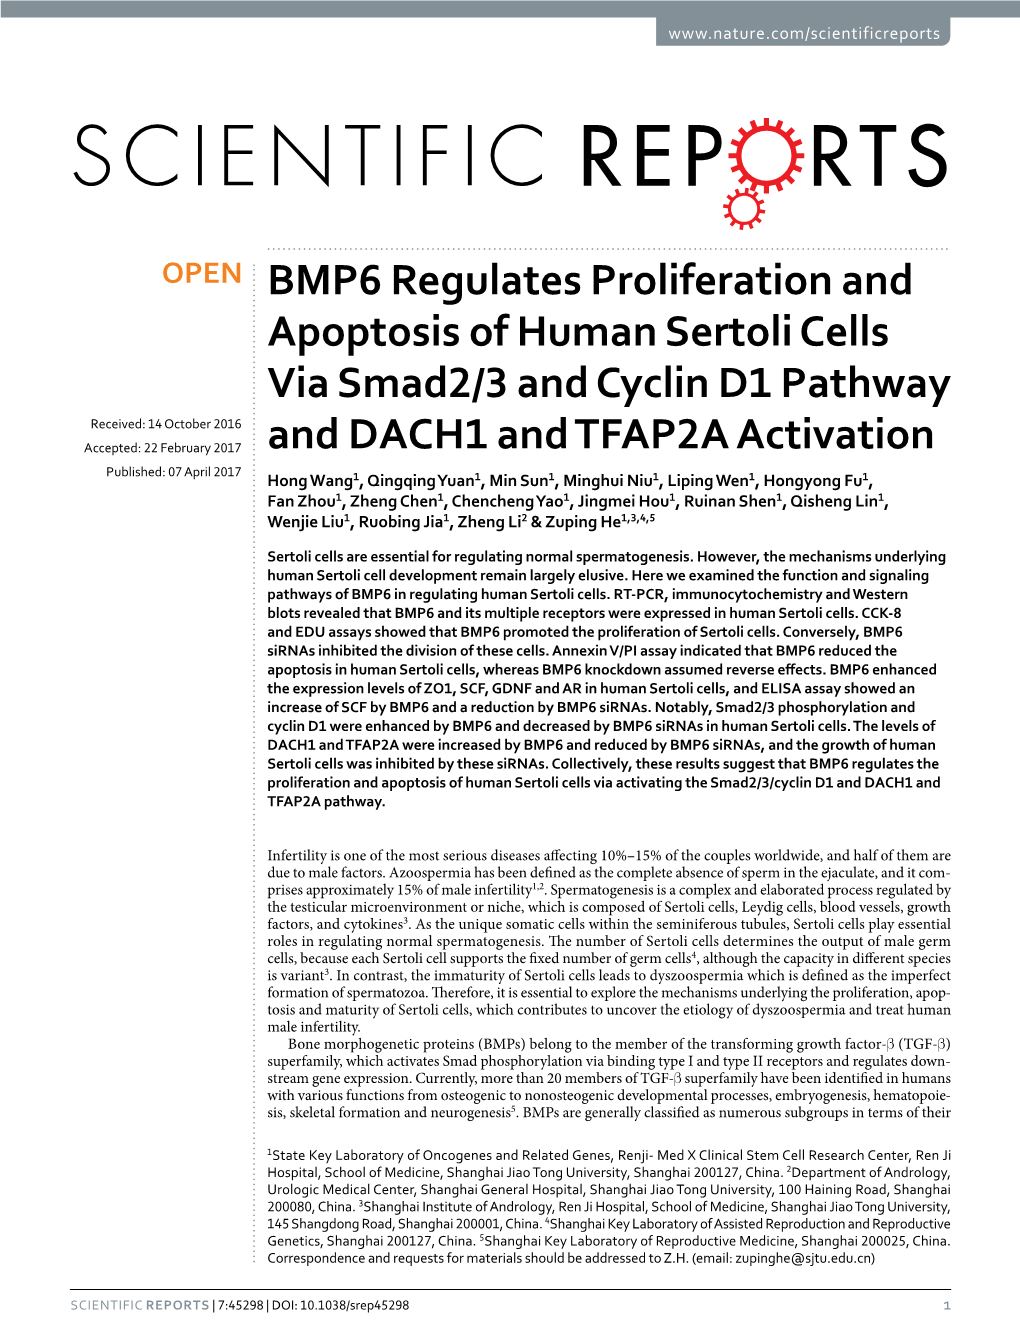 BMP6 Regulates Proliferation and Apoptosis of Human Sertoli Cells